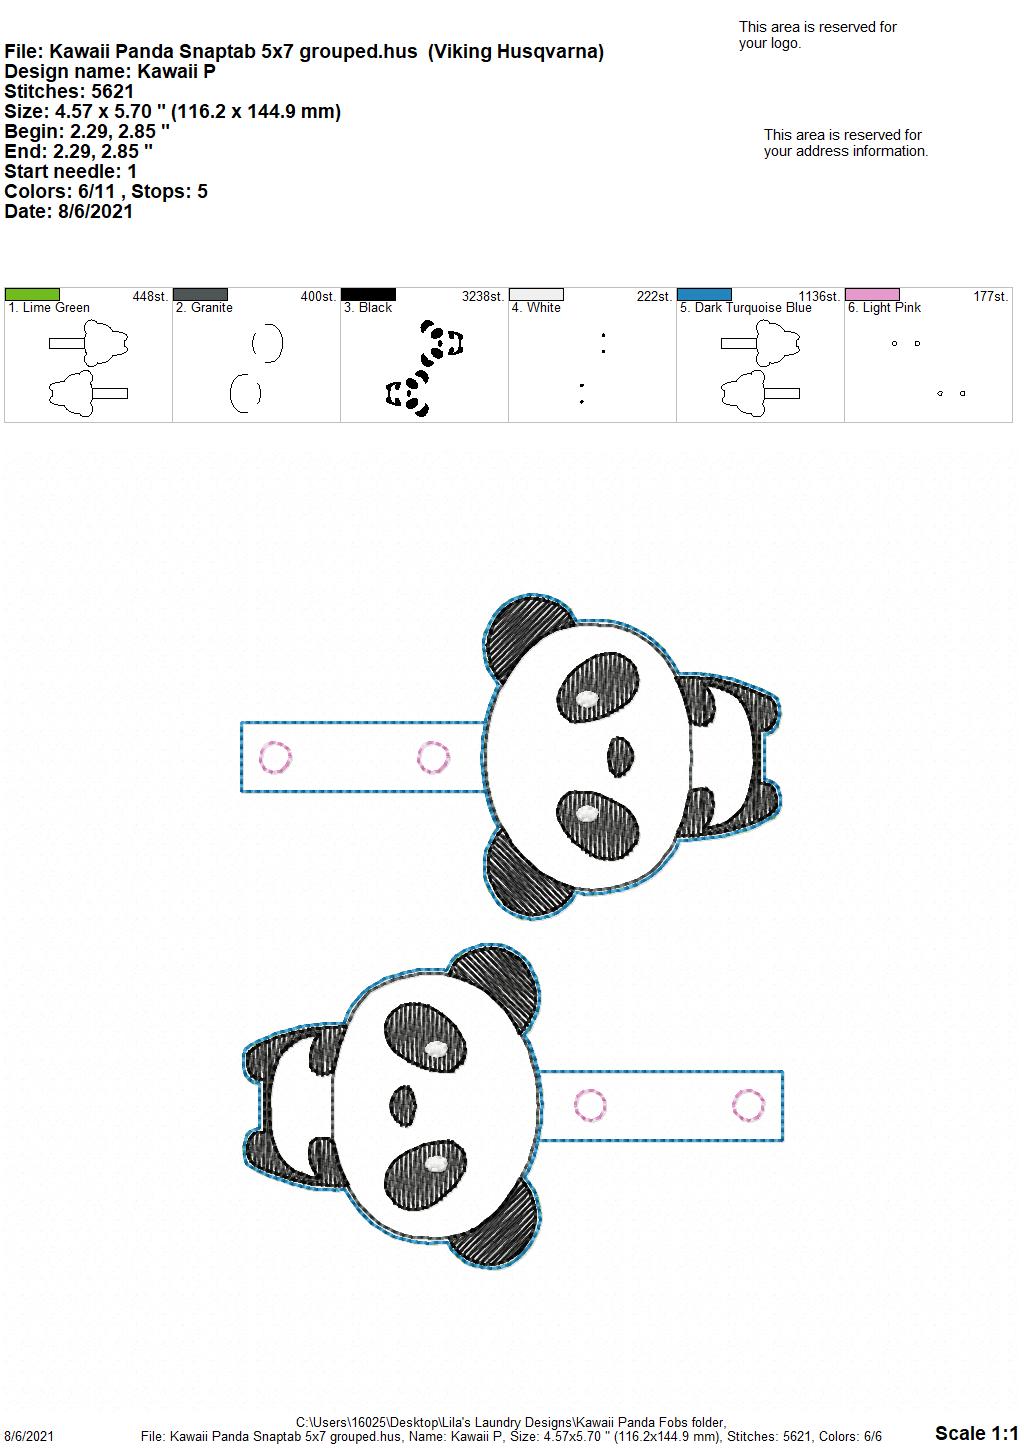 Kawaii Panda Fobs - DIGITAL Embroidery DESIGN